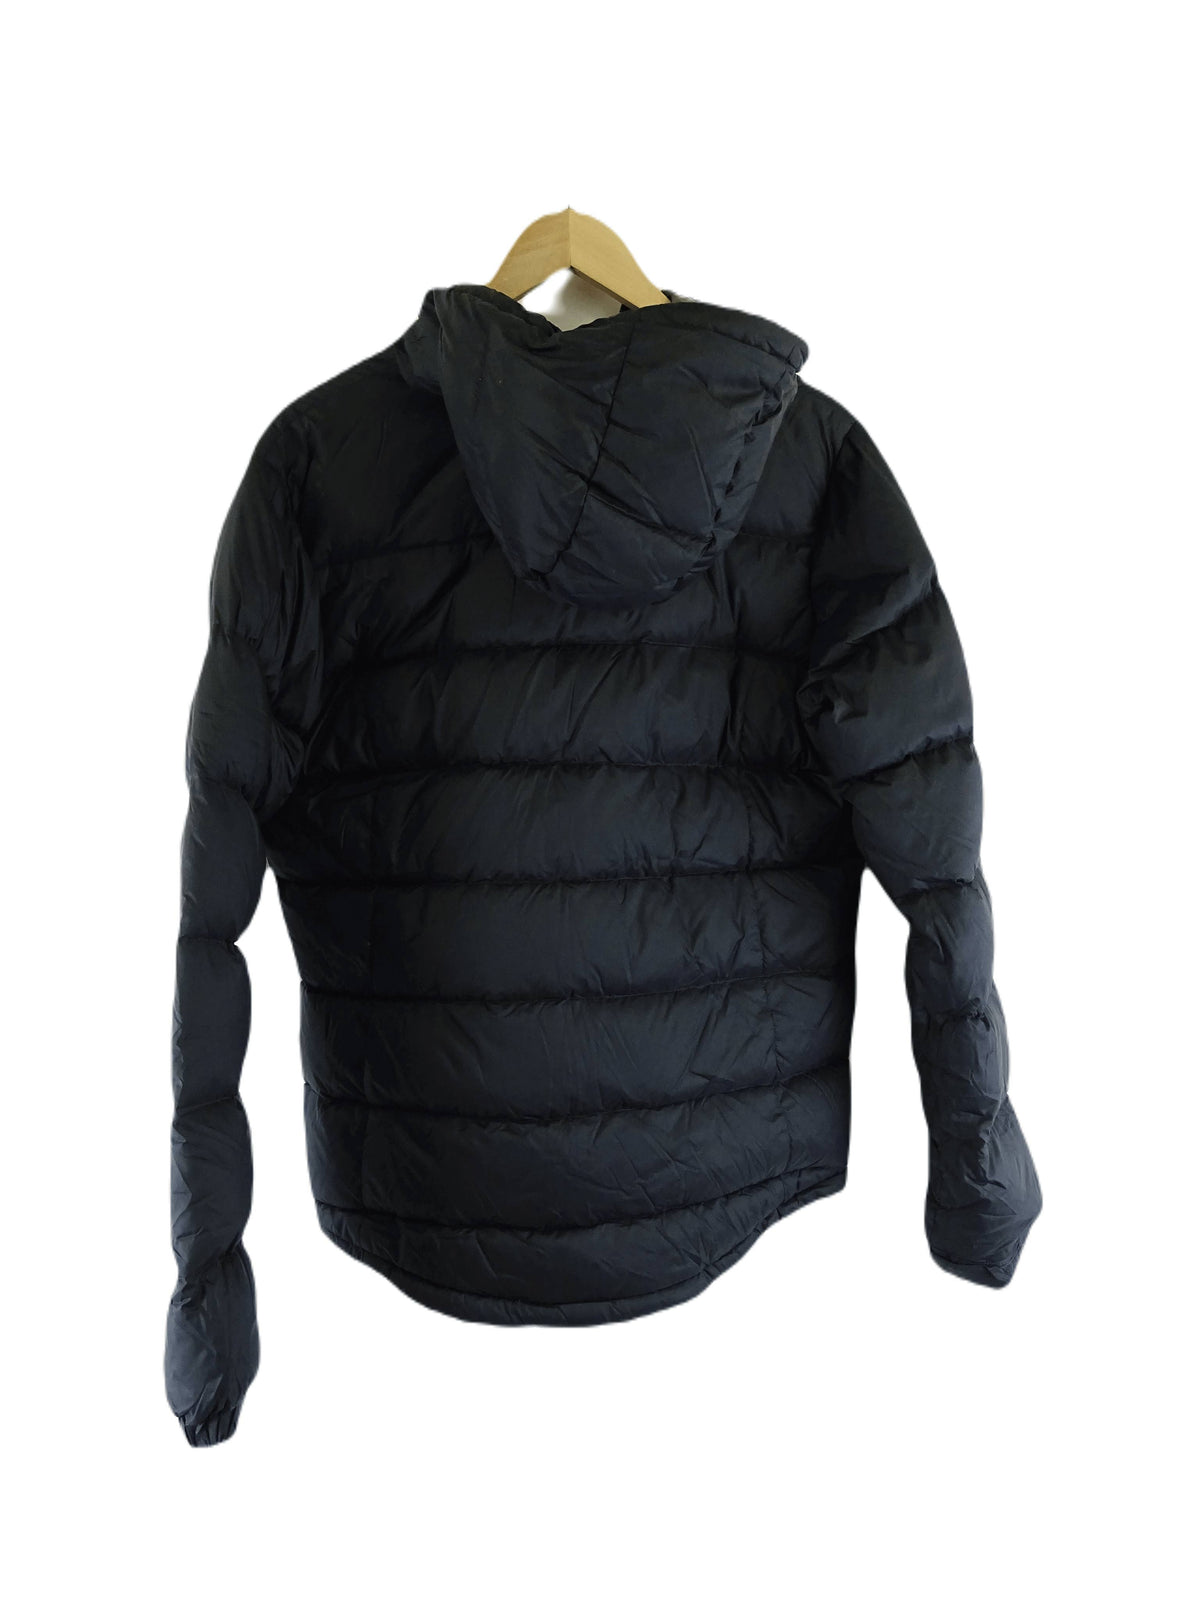 Macpac Black Puffer Jacket 14